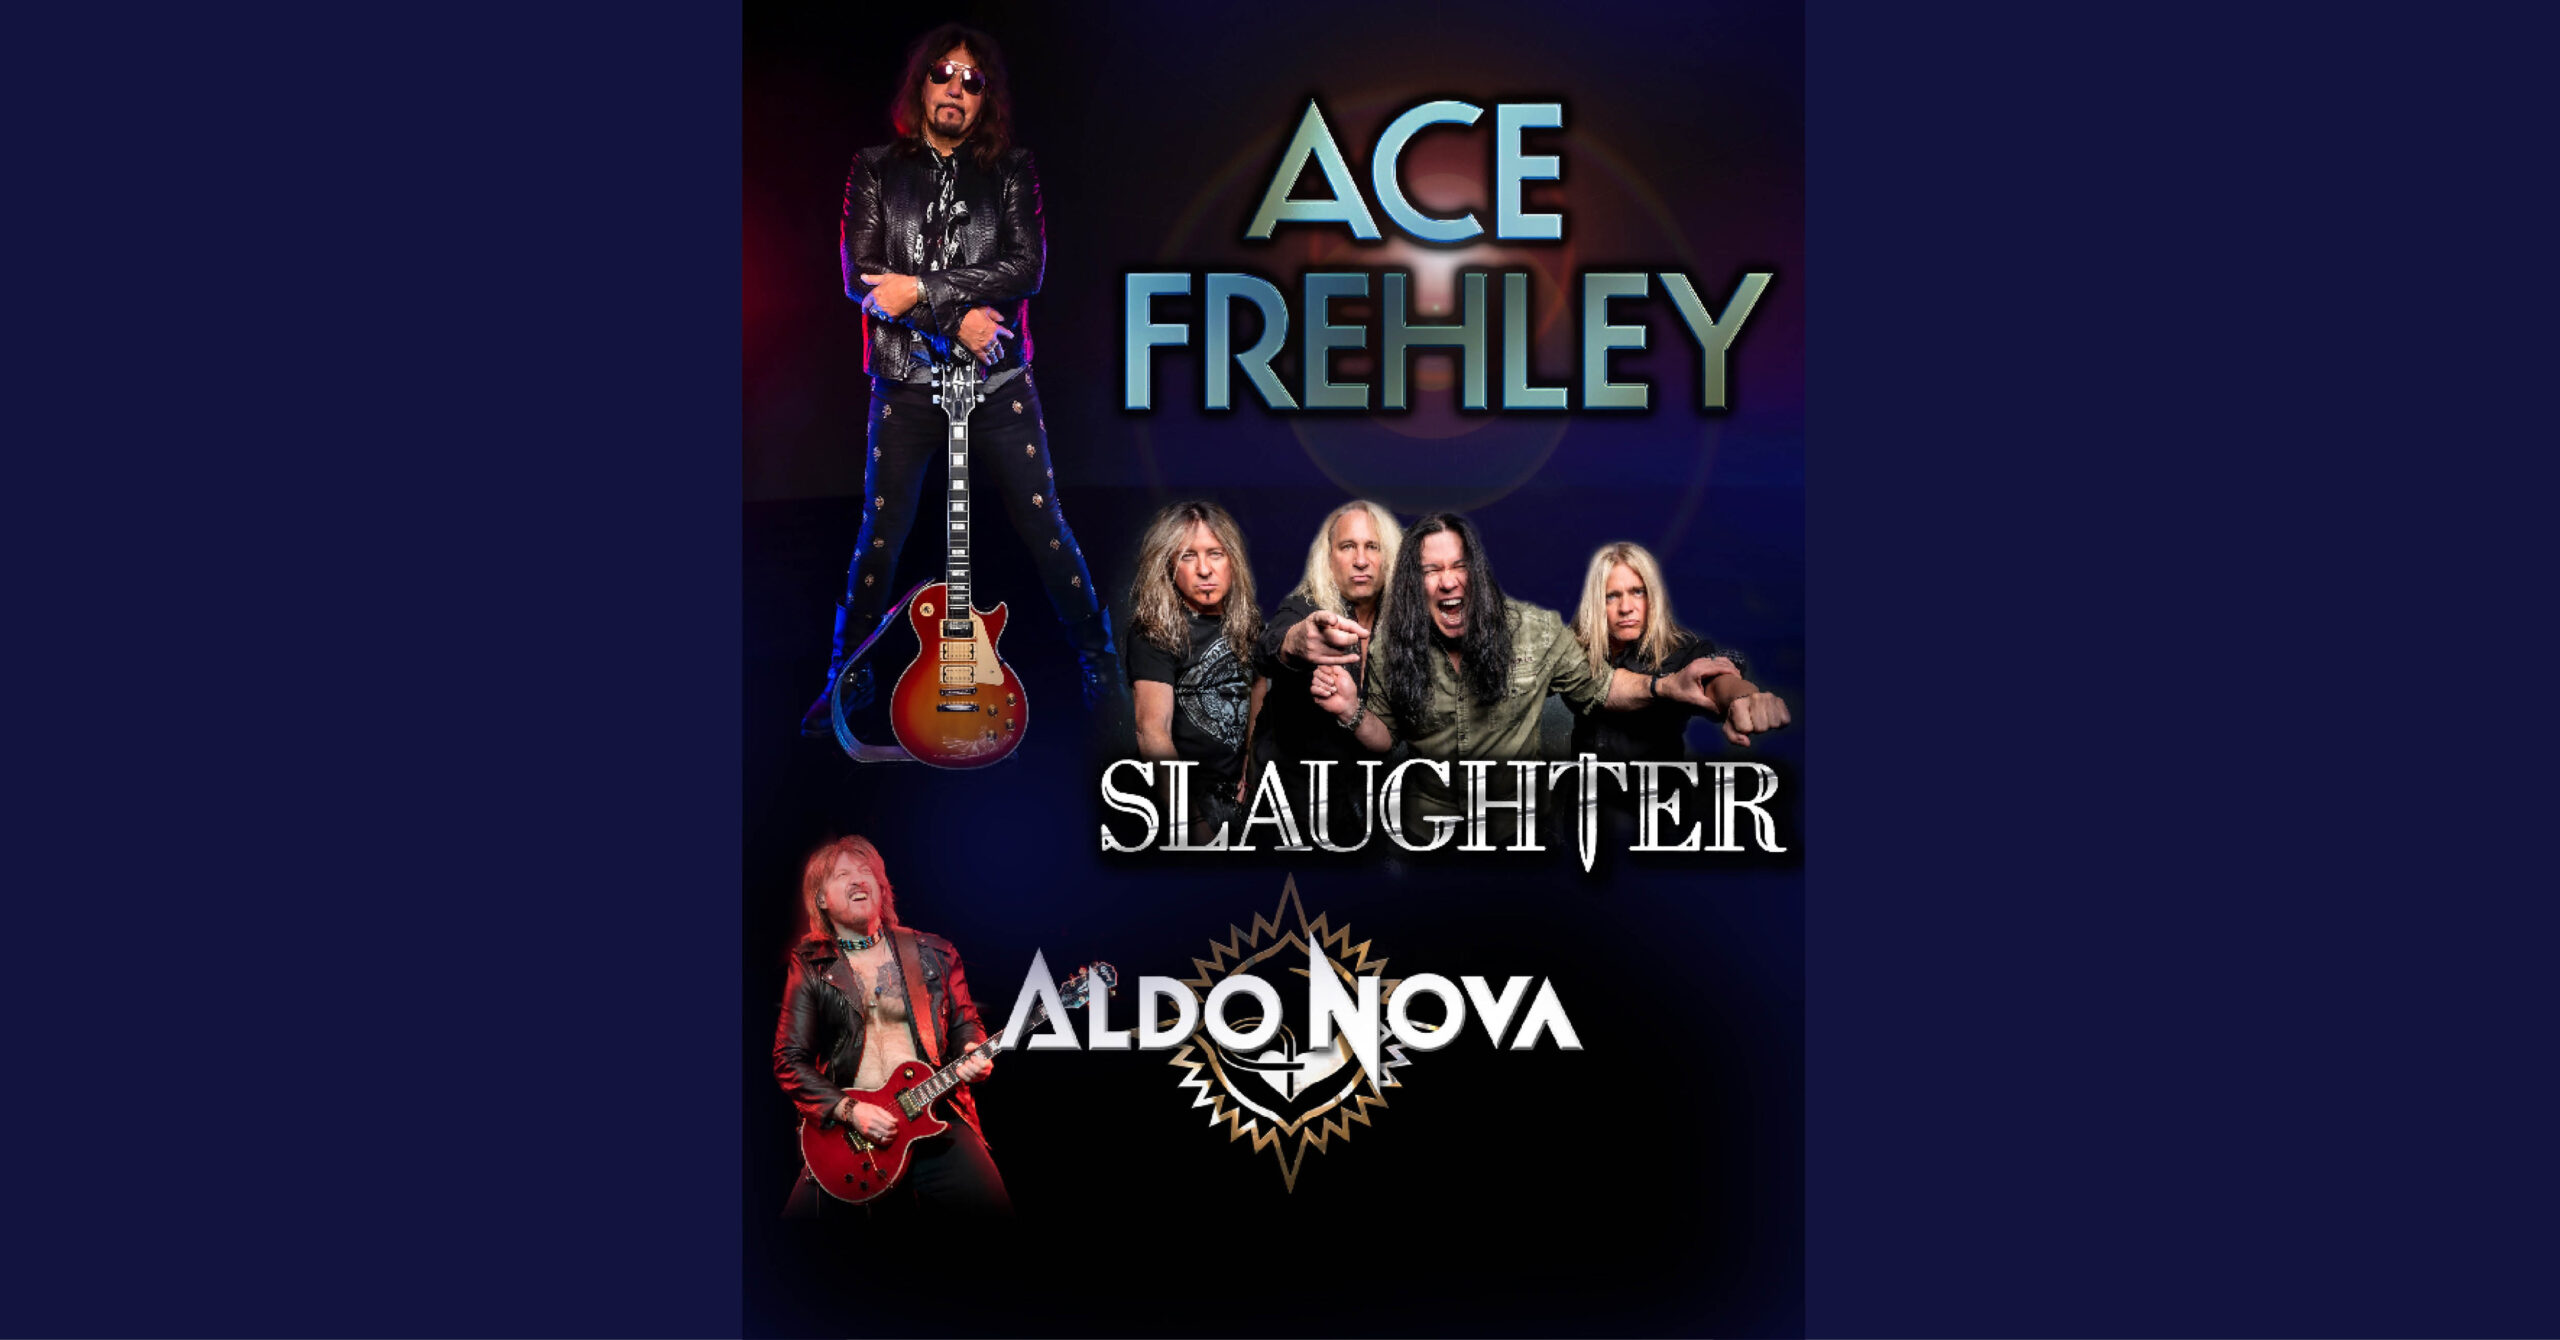 Ace Frehley, Slaughter, and Aldo Nova